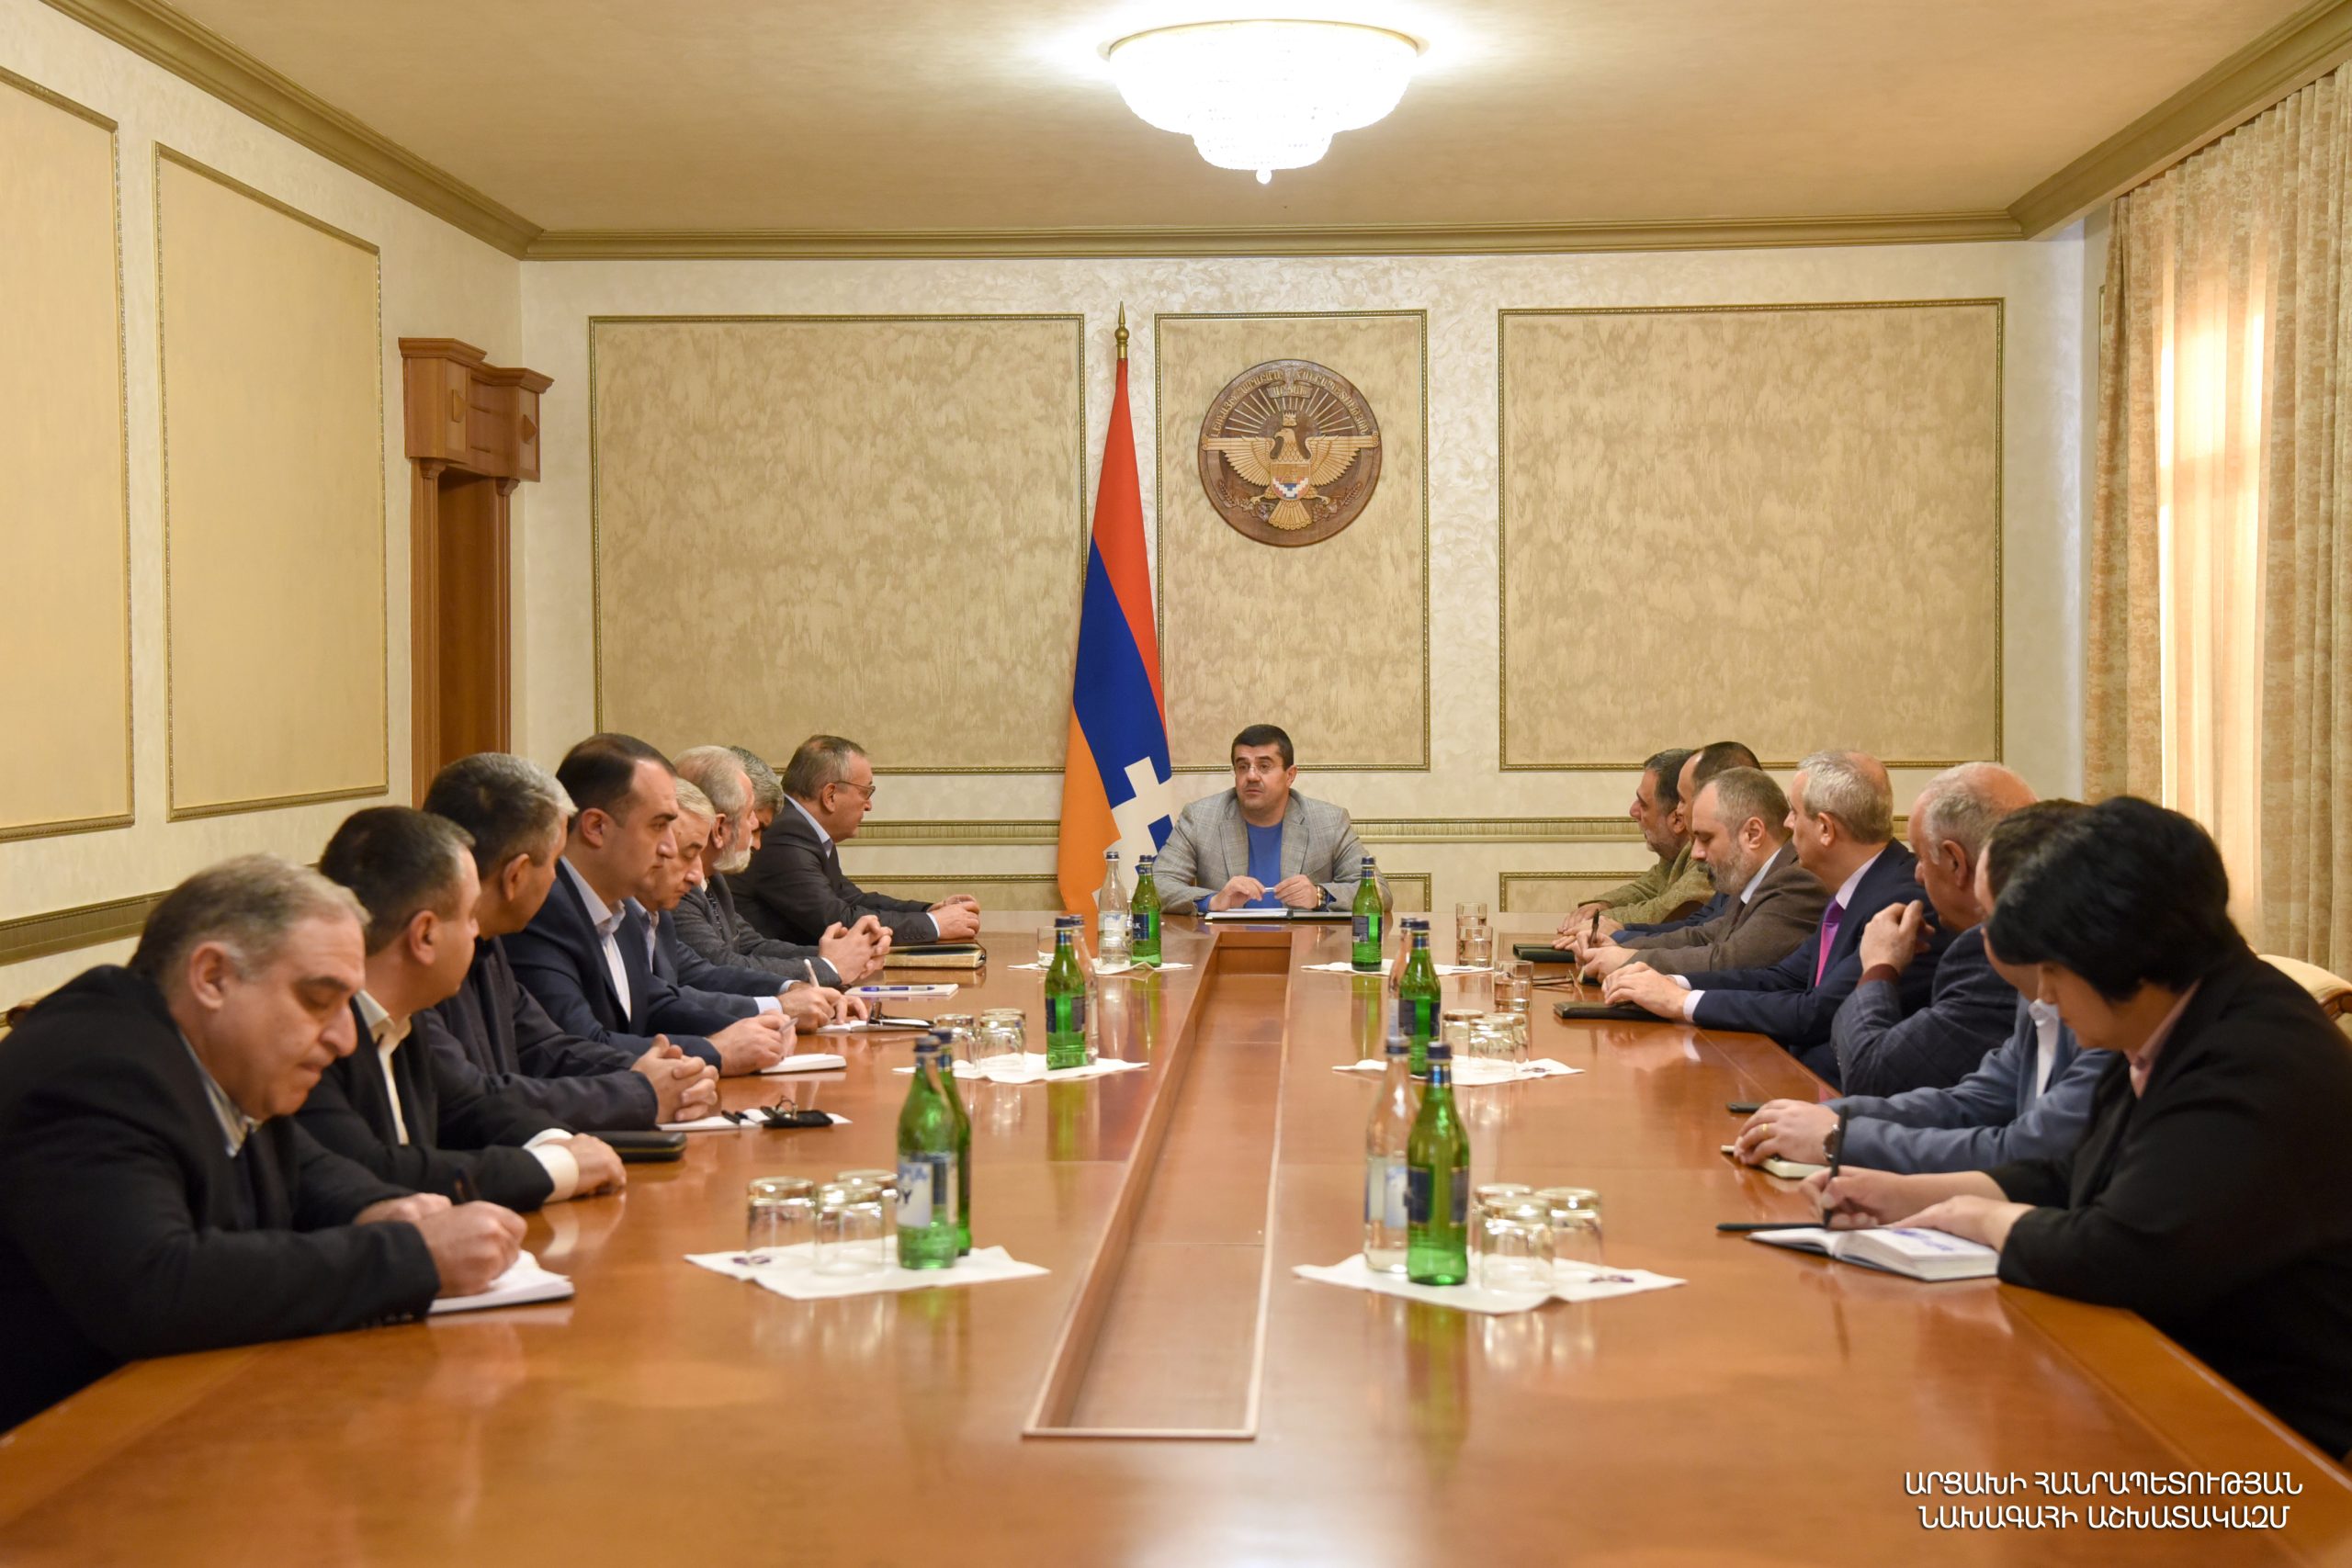 Nearly all Karabakh ministers dismissed in major shake-up